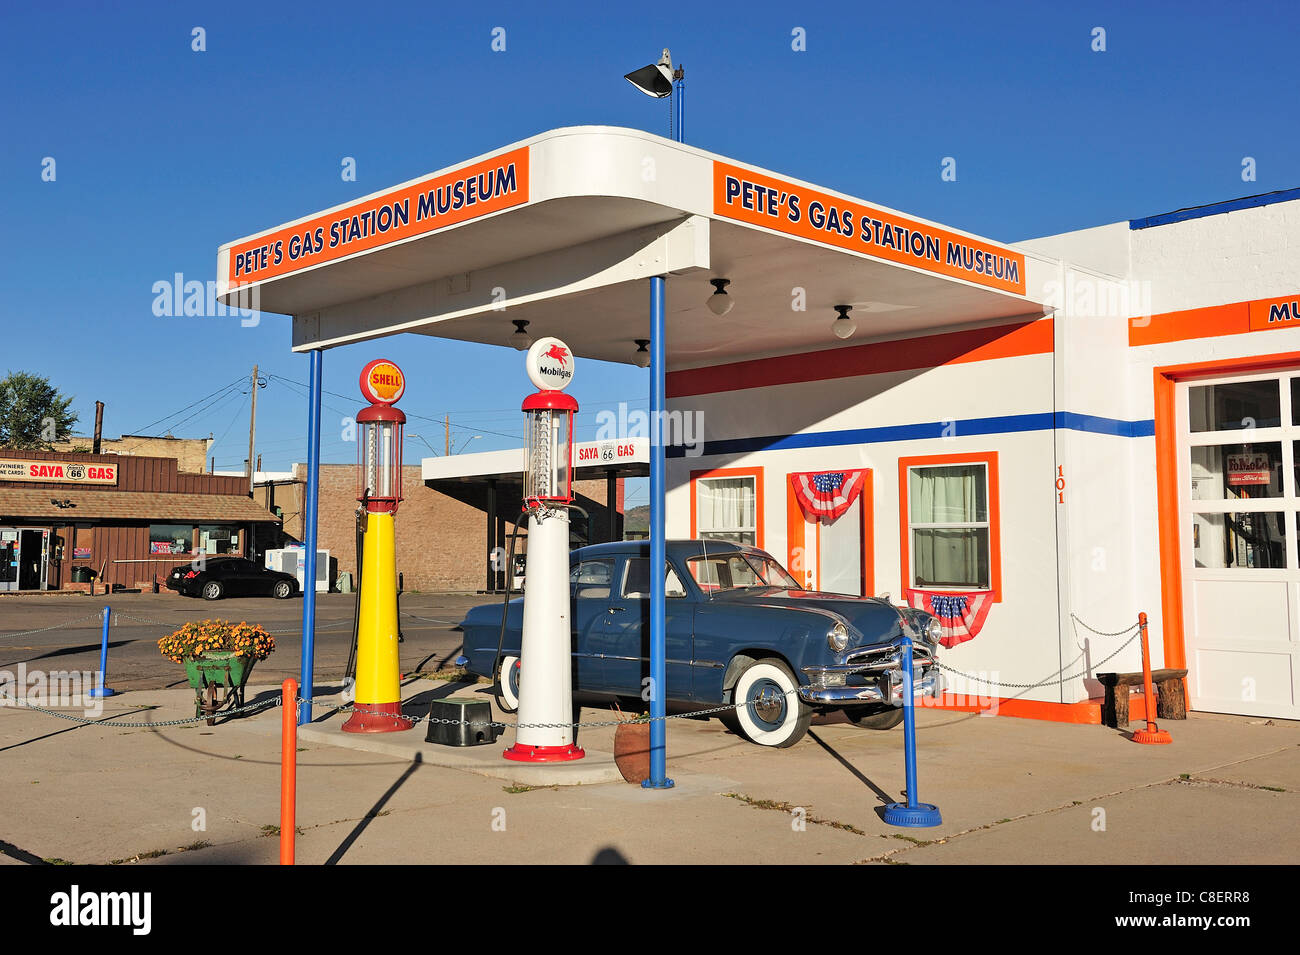 Pete's, Gas Station, Museum, Williams, Route 66, Arizona, USA, United States, America, Stock Photo